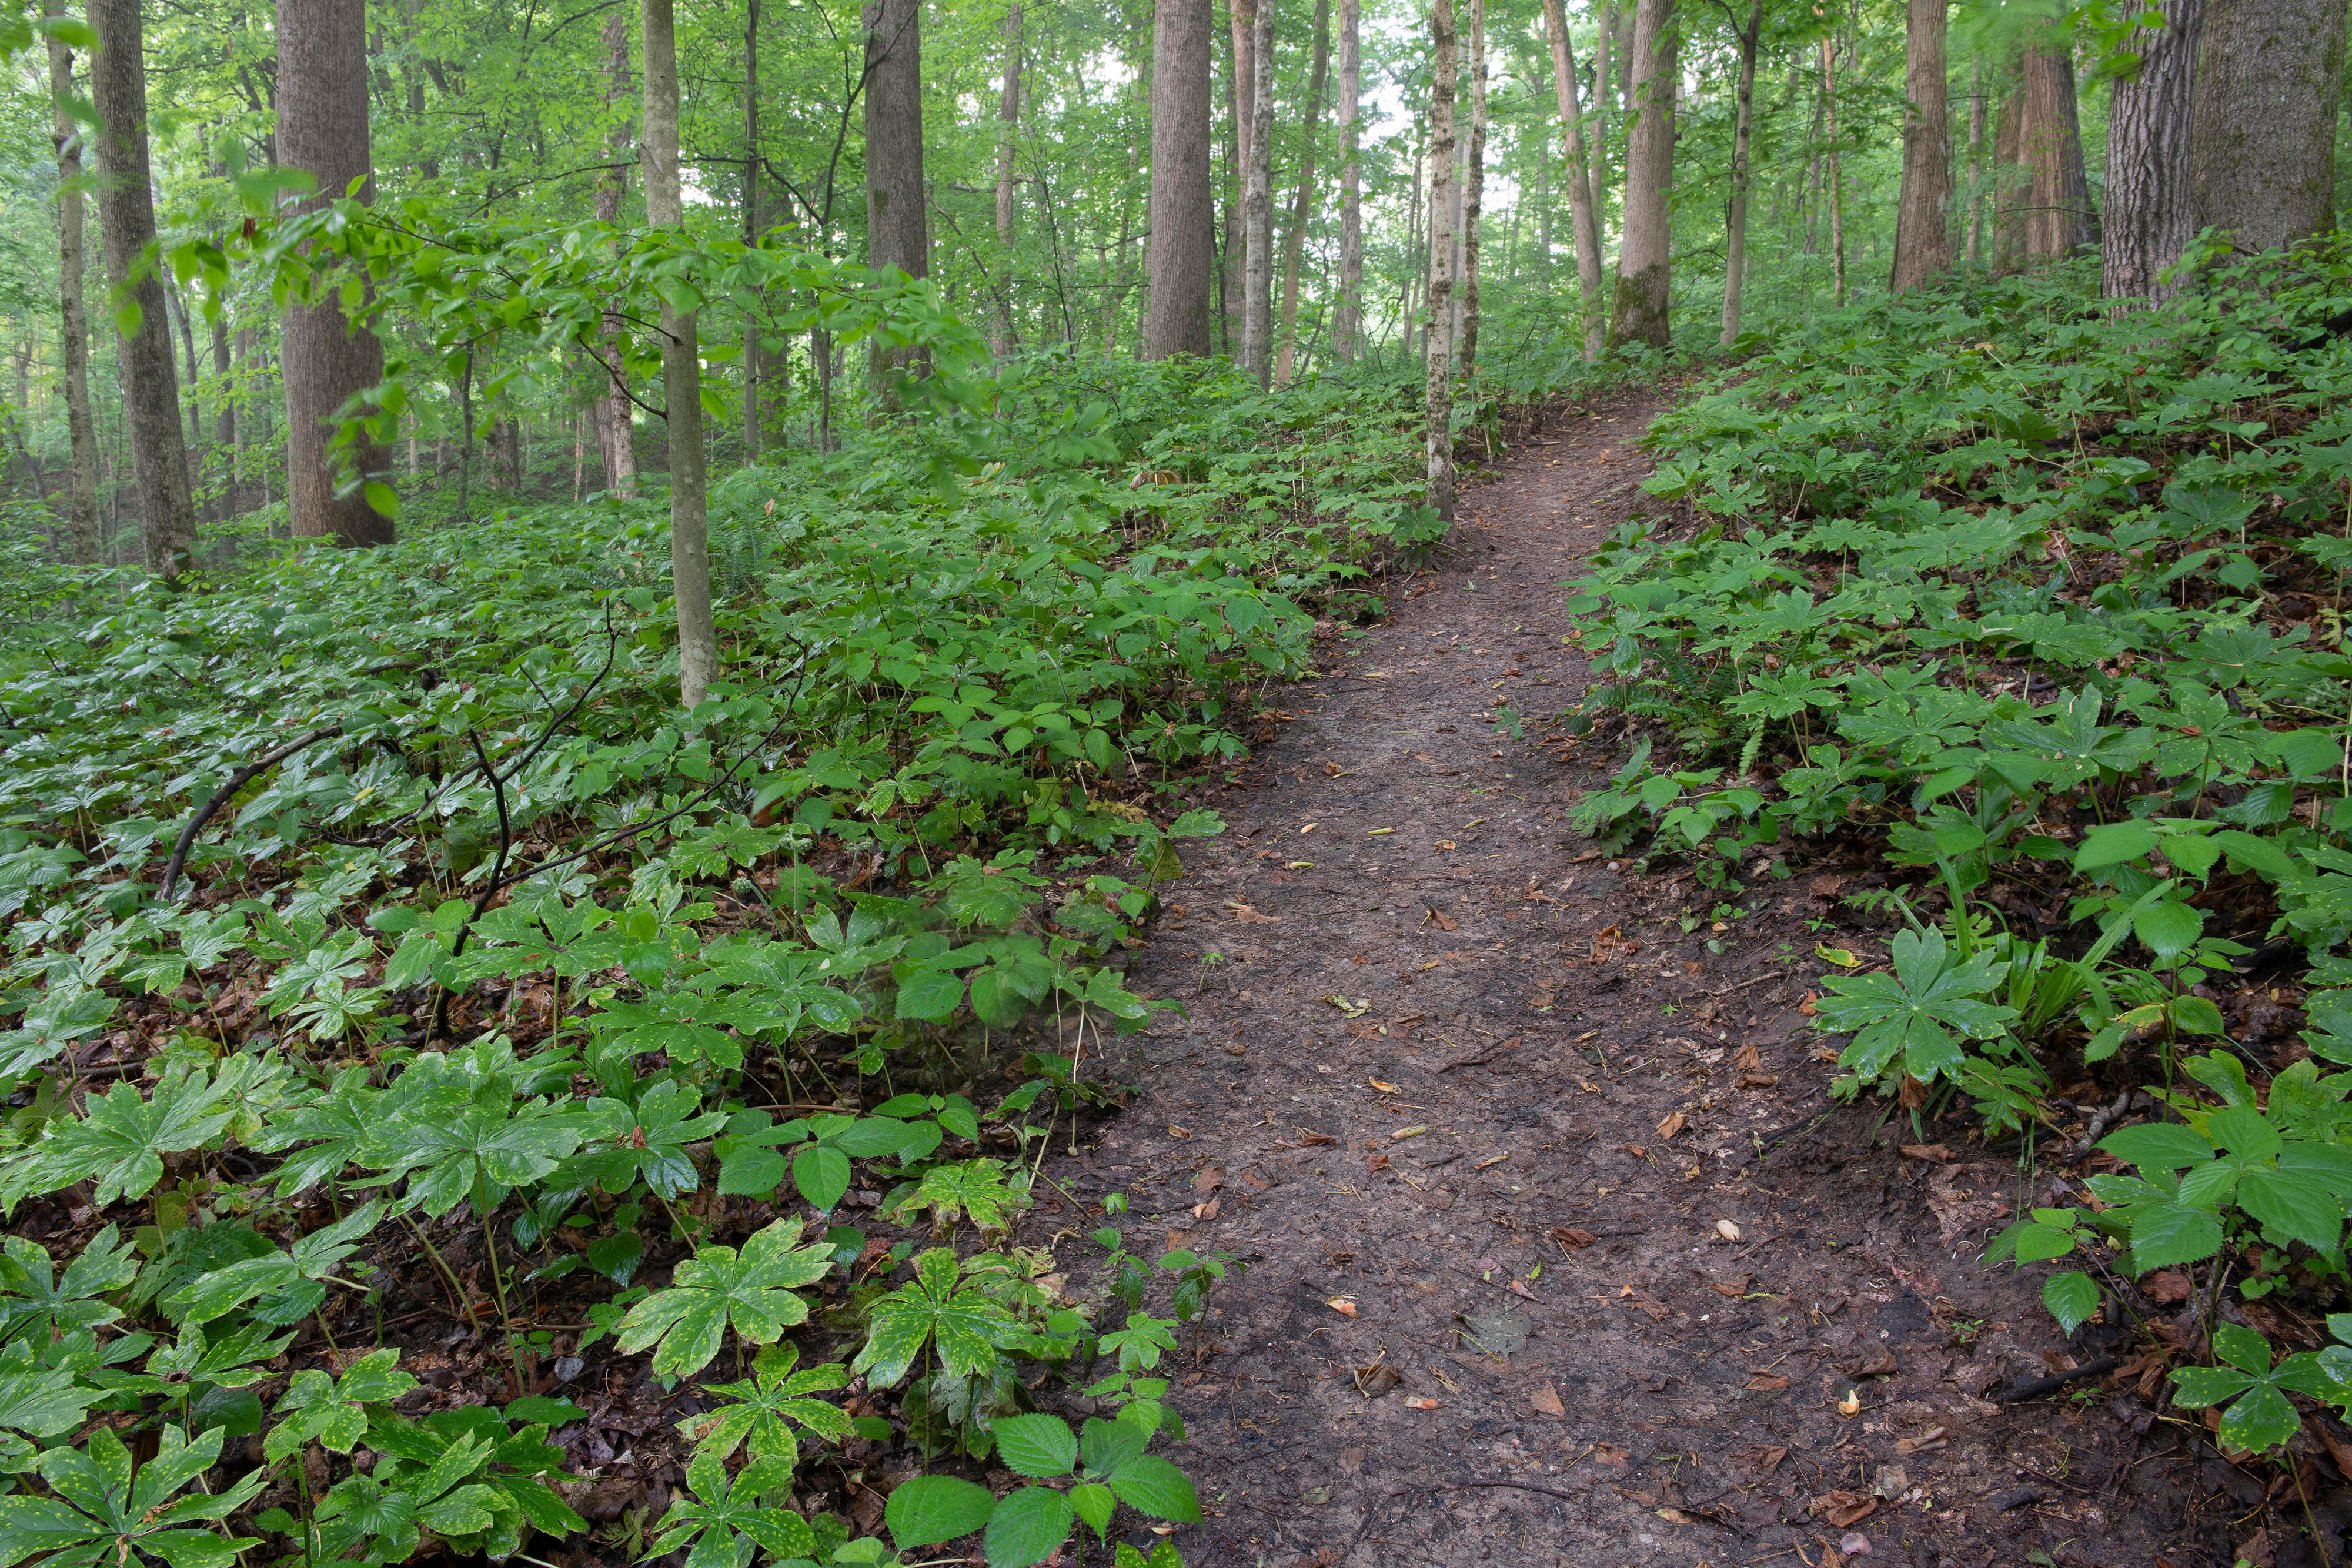 Trail runs through springtime plants in green forest.